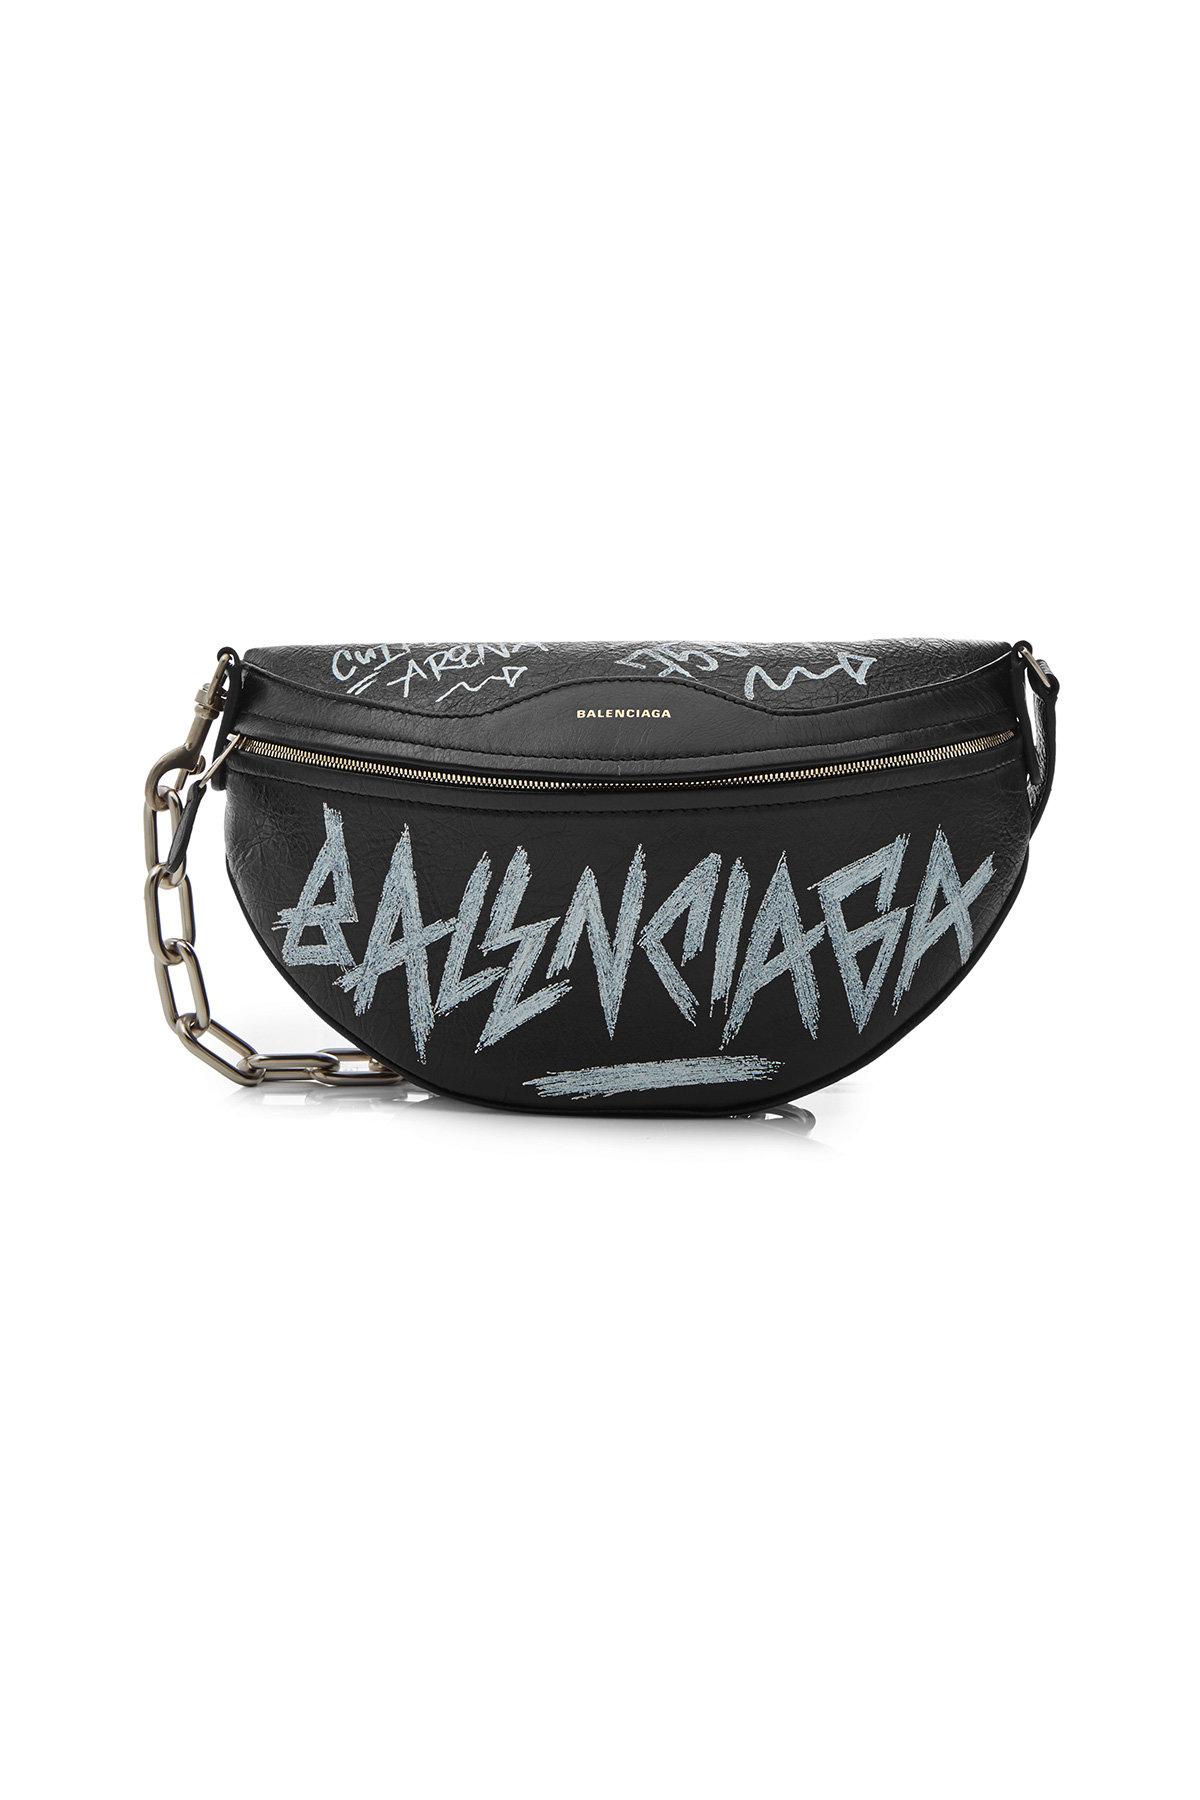 Balenciaga Black And White Souvenir Xs Graffiti Leather Belt Bag In Black White Modesens